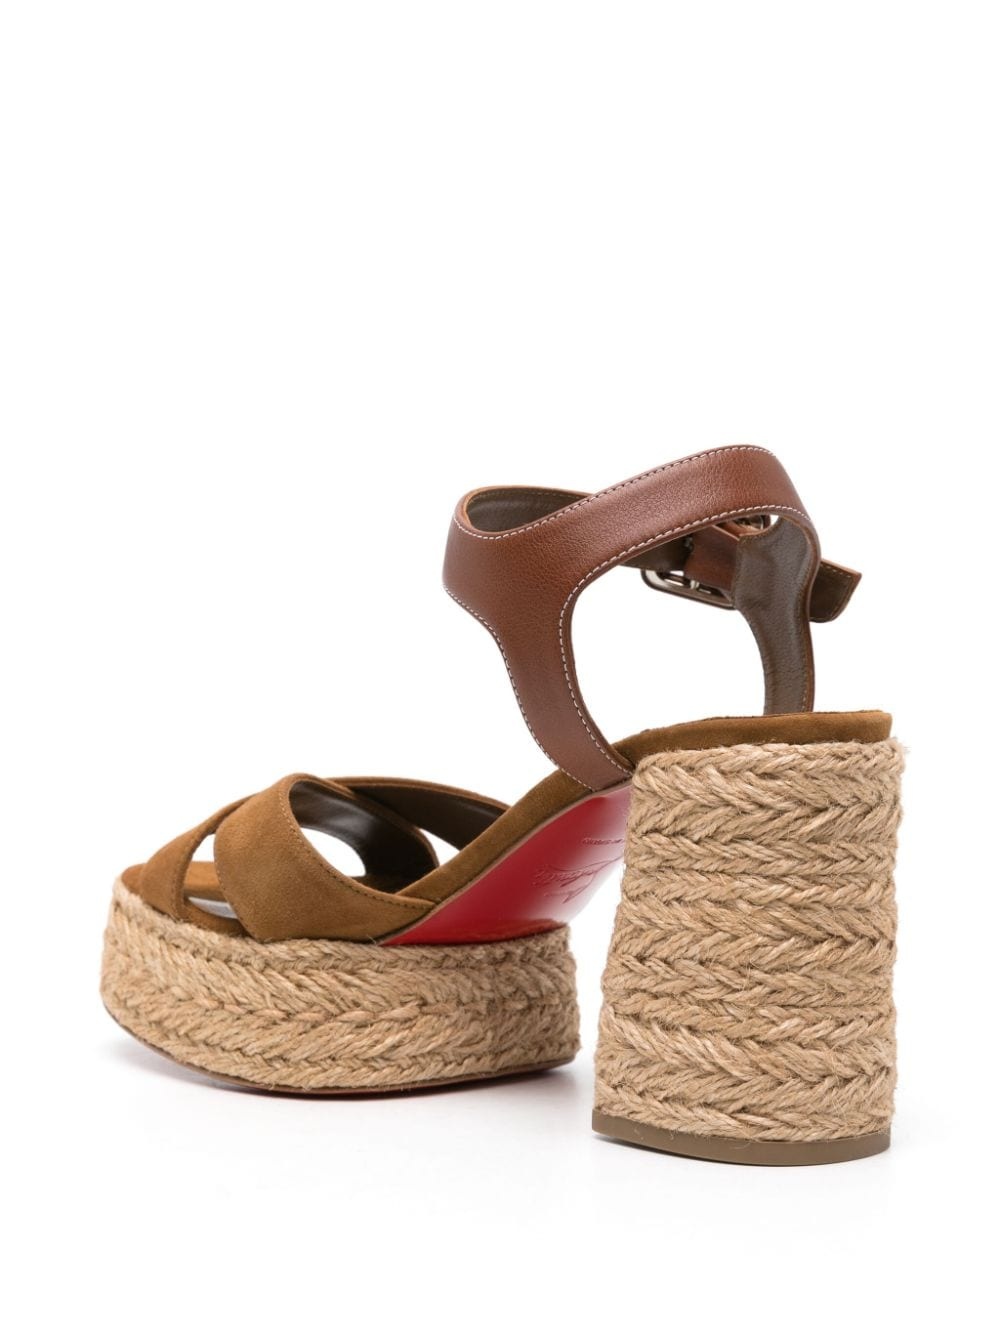 Calakala 70mm leather sandals - 3